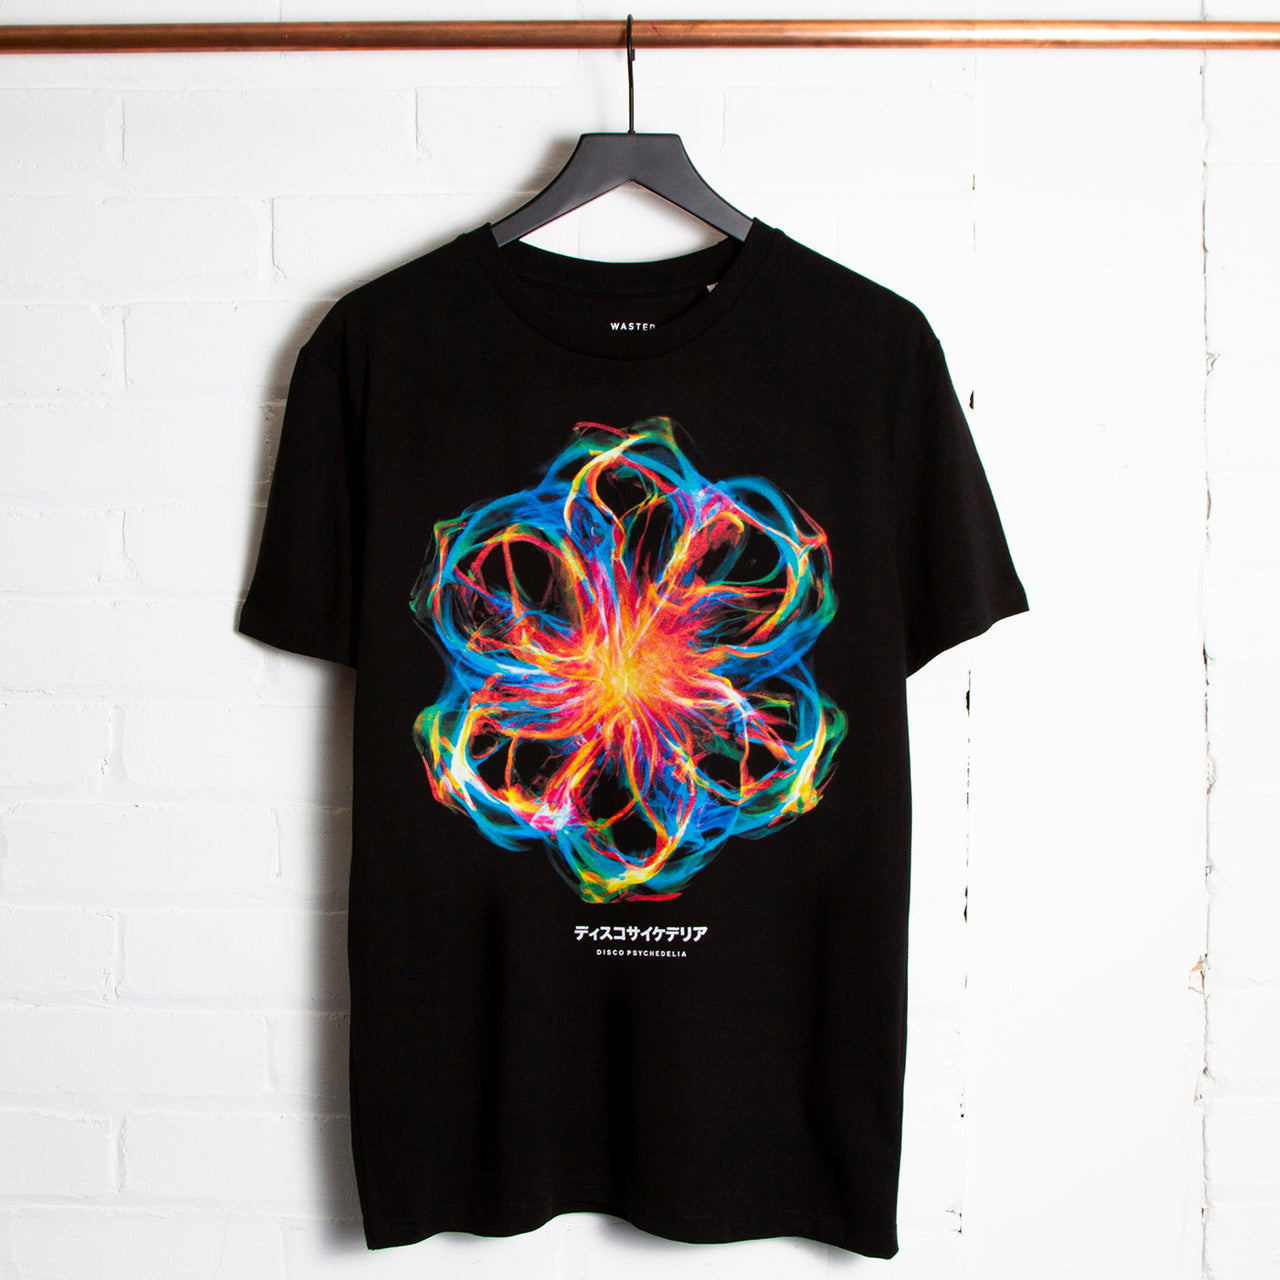 016 Disco Psychedelia Front Print - Tshirt - Black